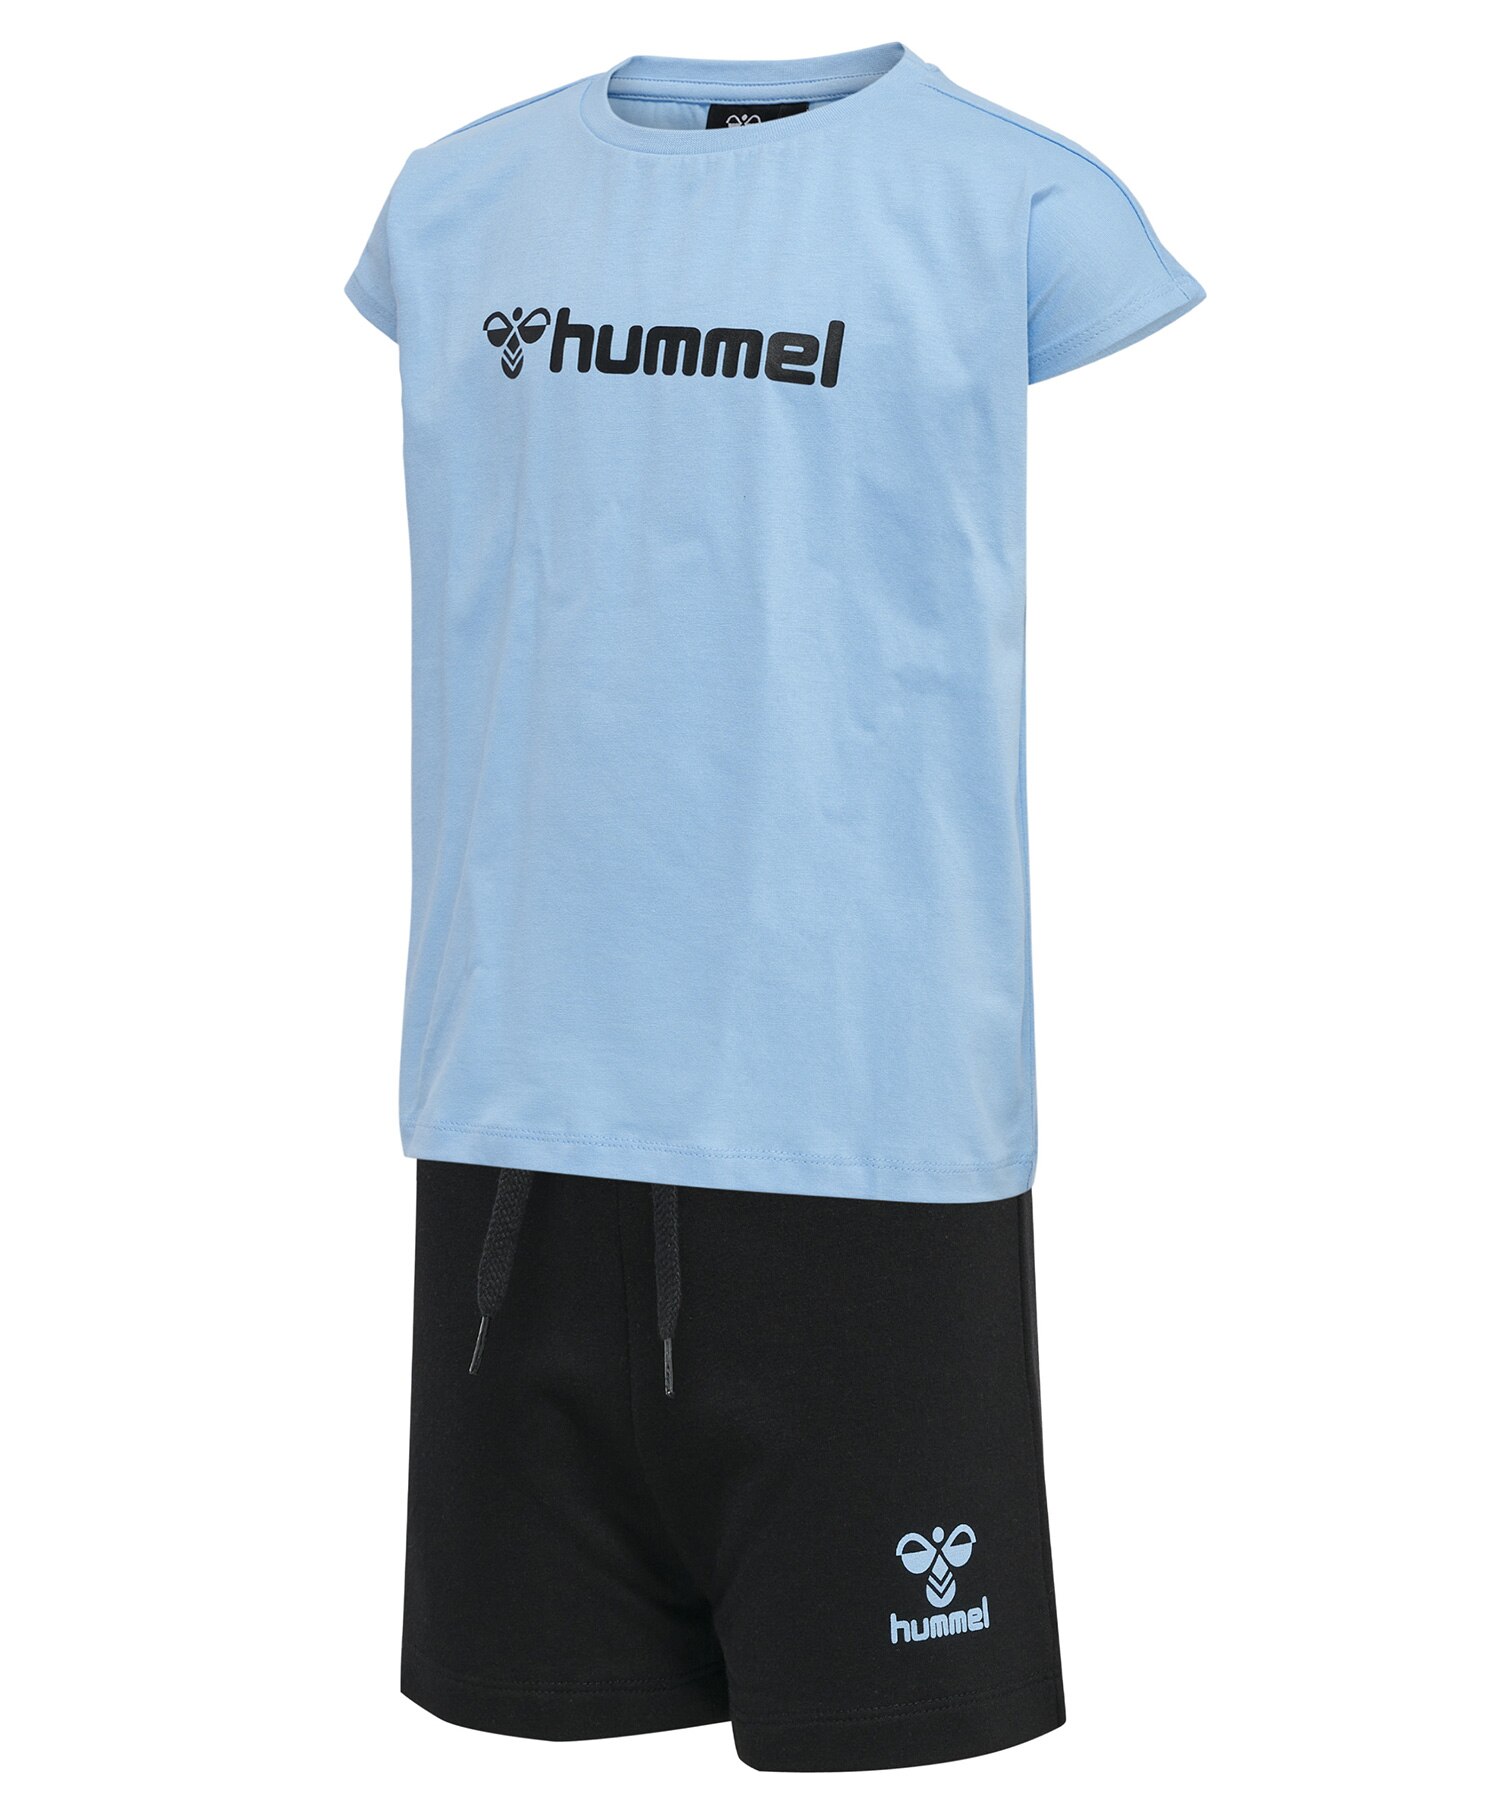 Hummel NOVA shorts set